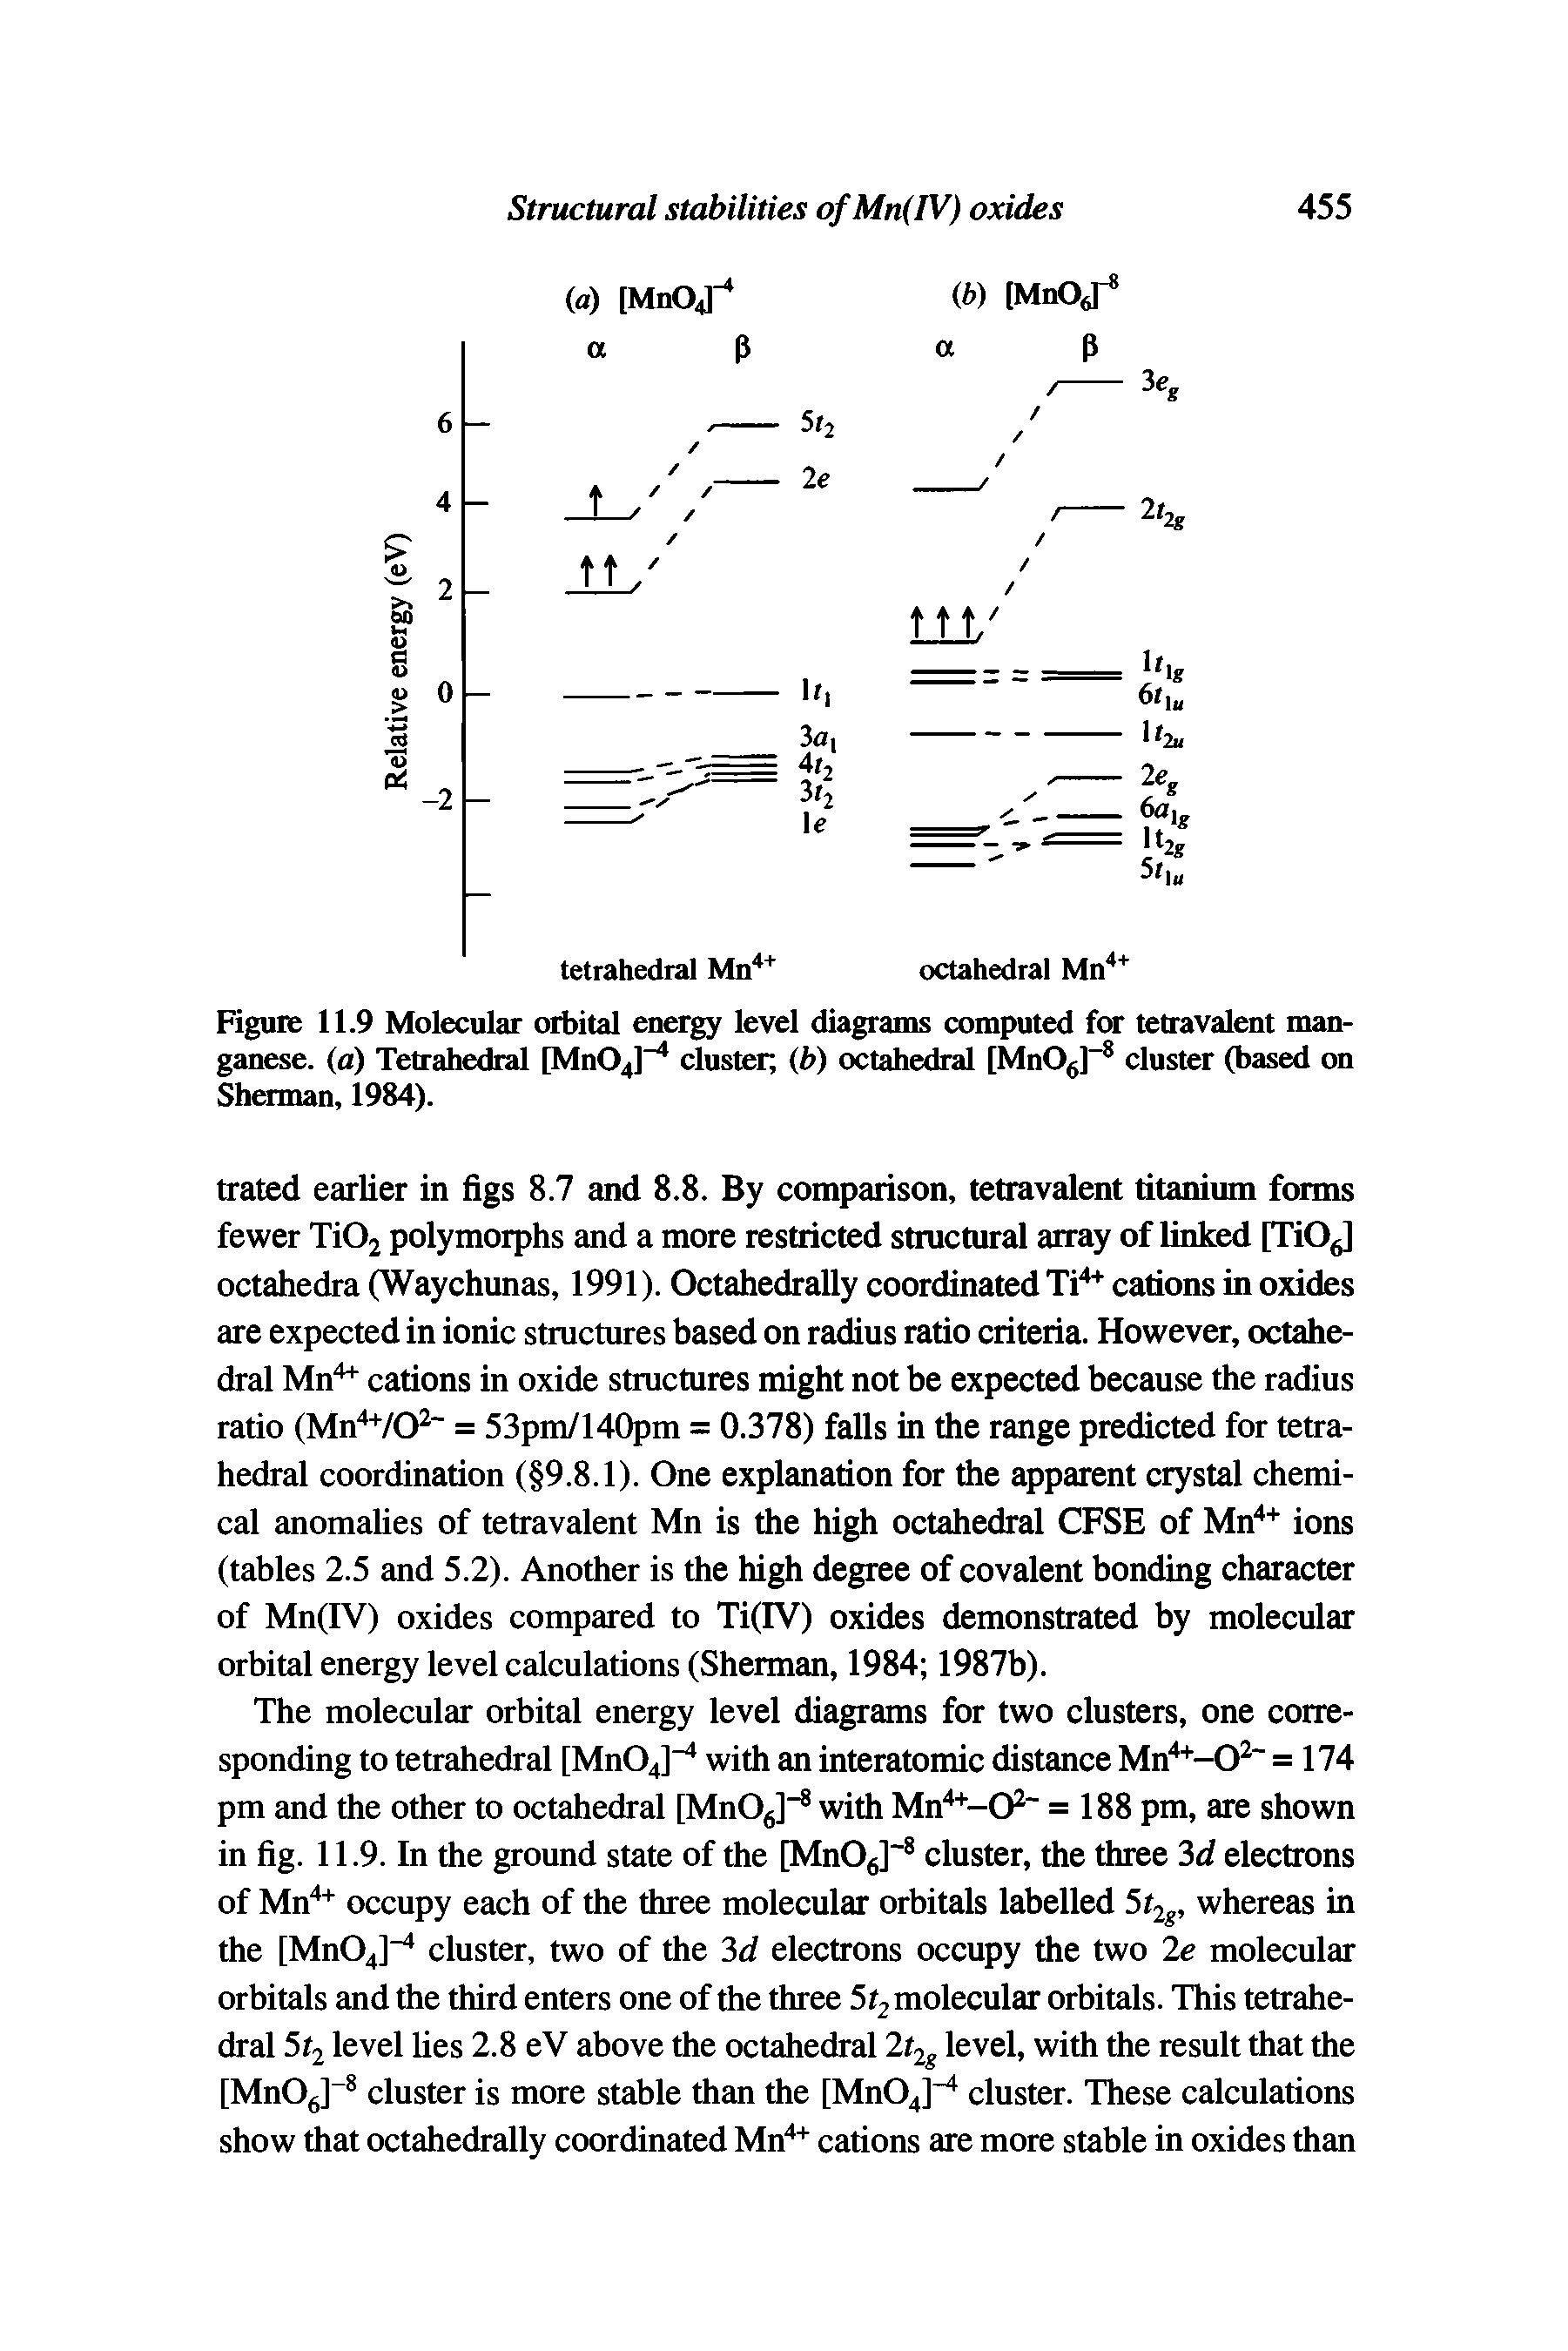 Figure 11.9 Molecular orbital energy level diagrams computed for tetravalent manganese. (a) Tetrahedral [MnOJ-4 cluster, (b) octahedral [MnOJ-8 cluster (based on Sherman, 1984).